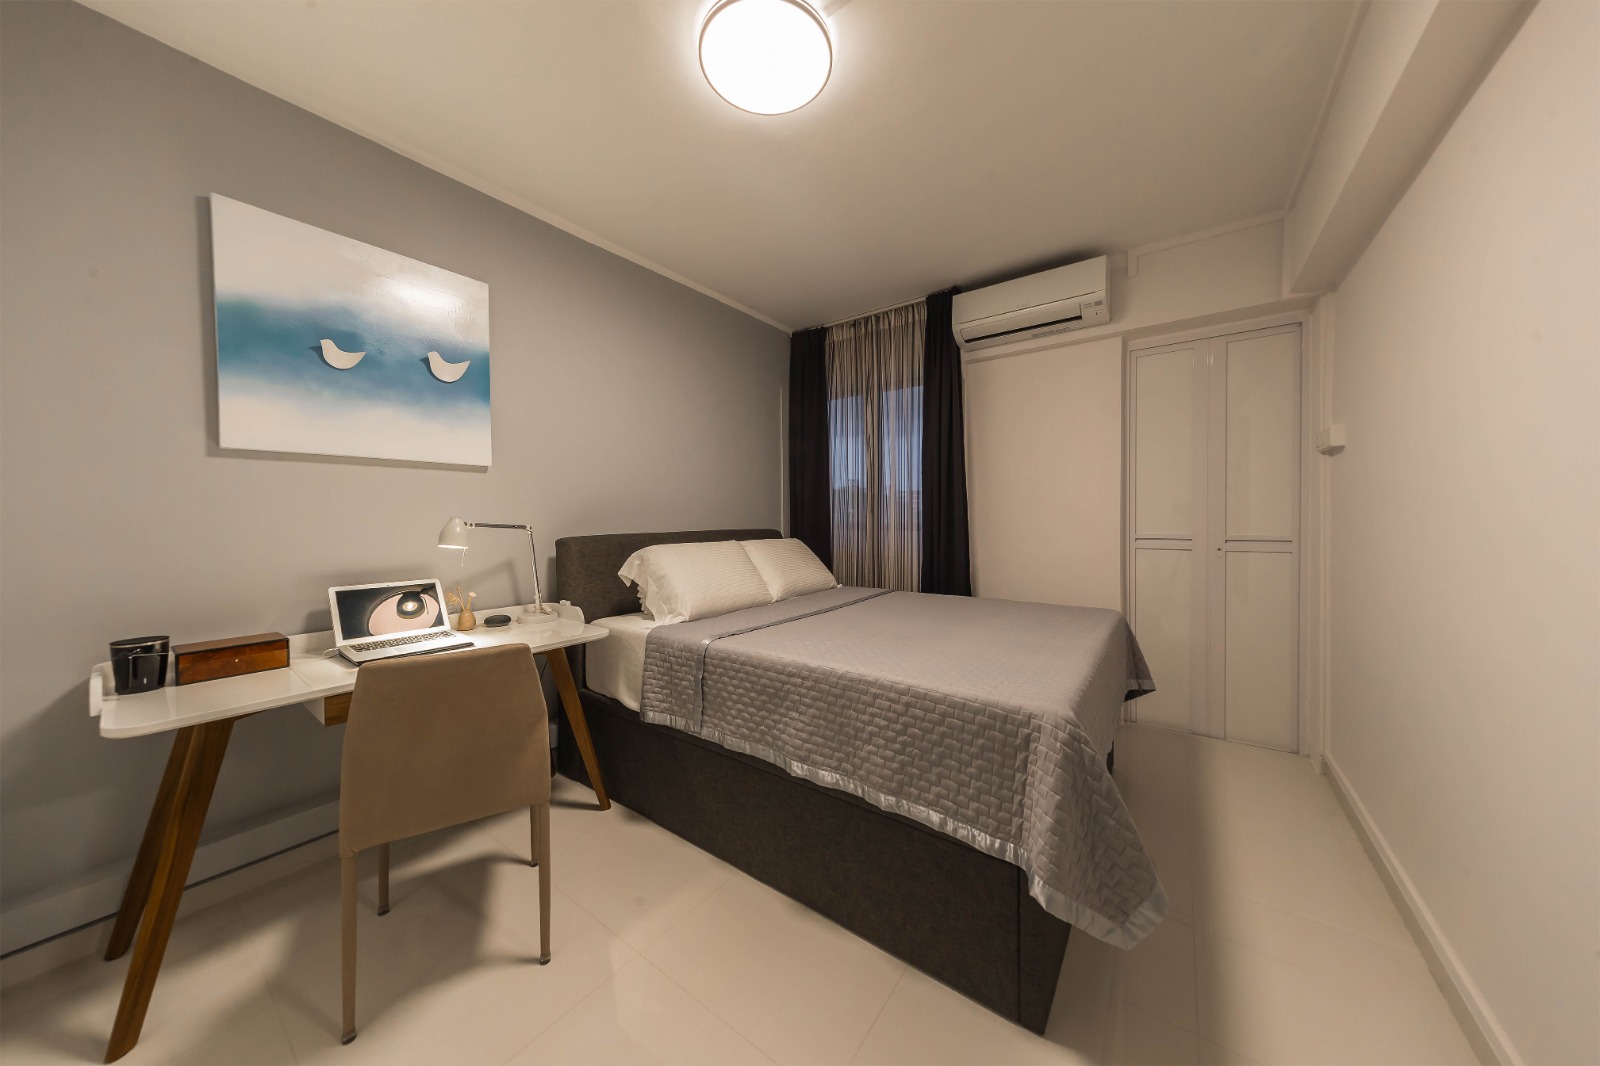 Eclectic, Retro Design - Bedroom - HDB 4 Room - Design by Renozone Interior Design House